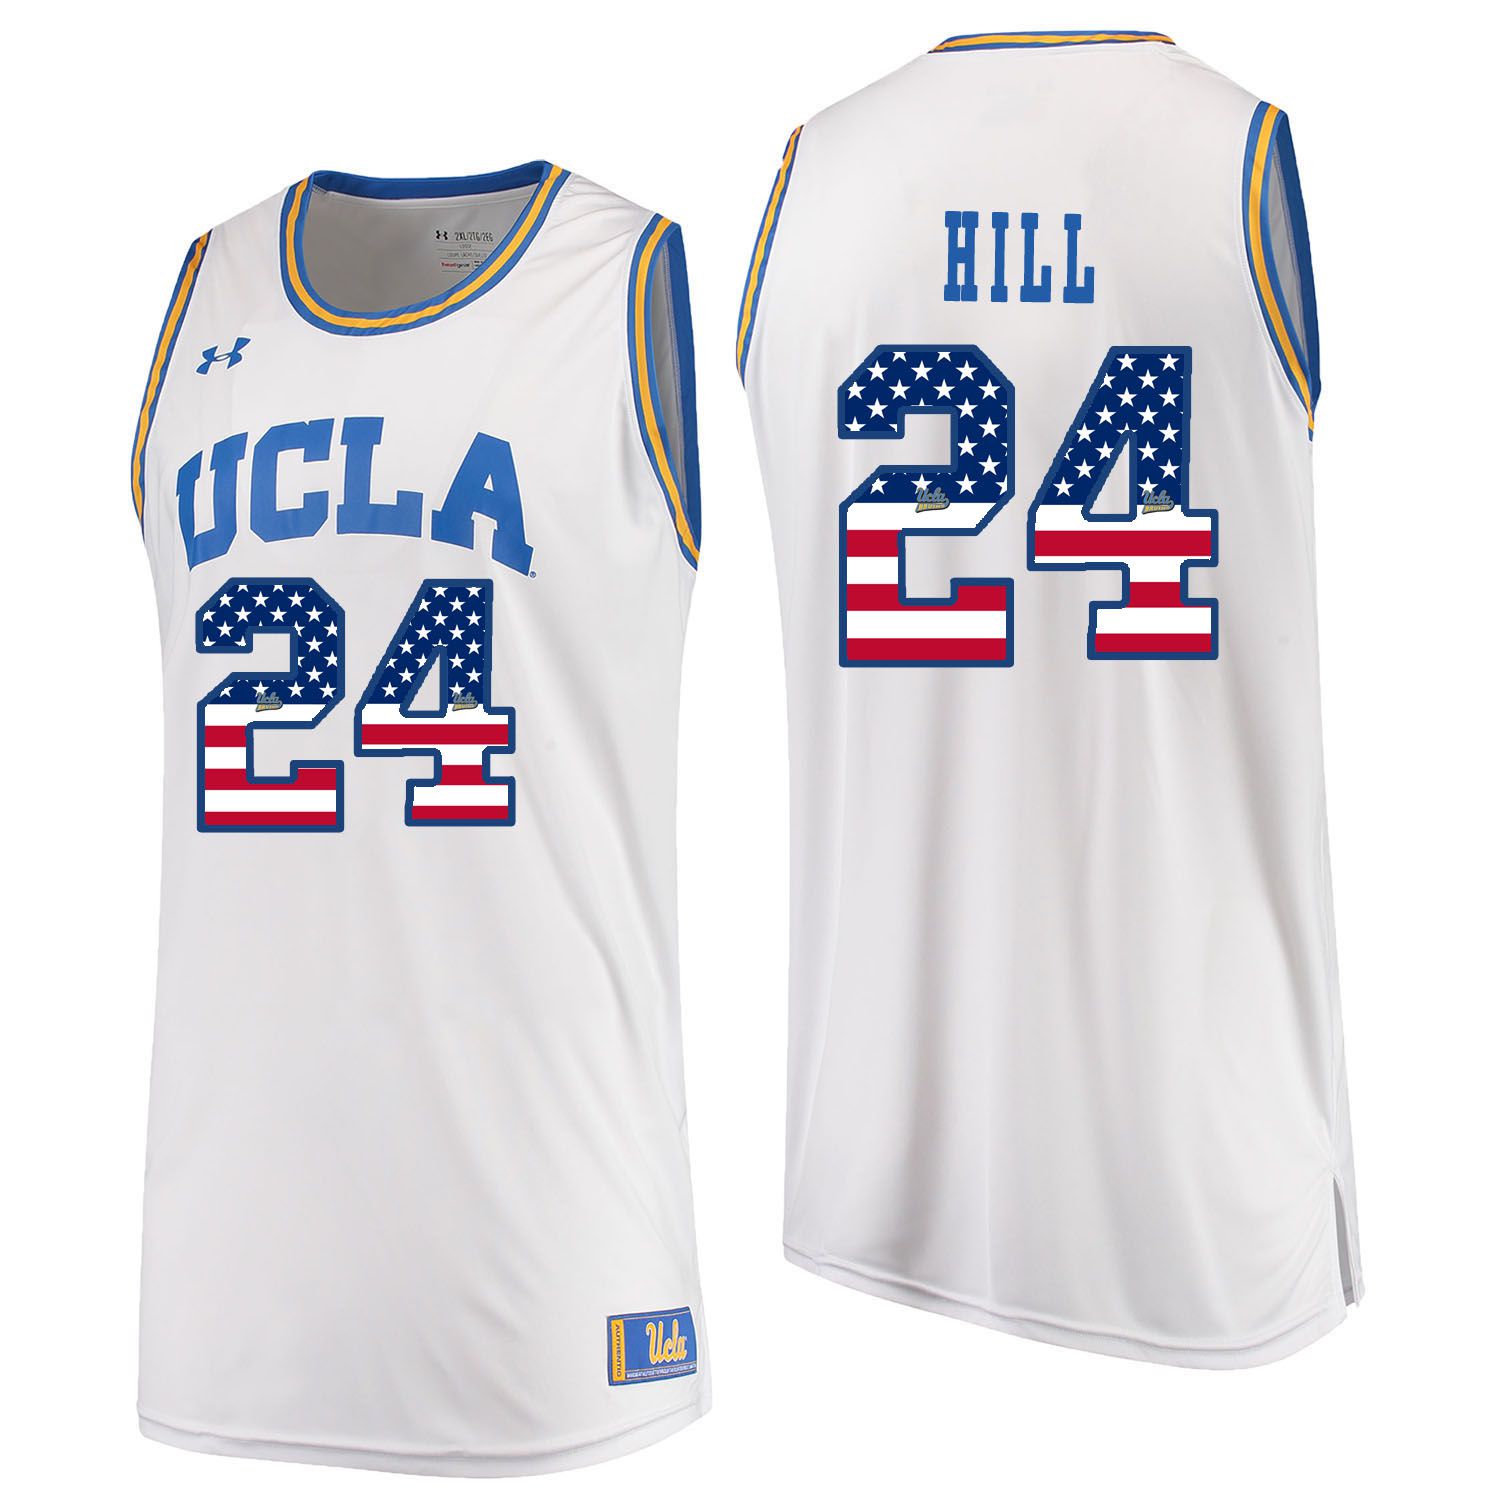 Men UCLA UA #24 Hill White Flag Customized NCAA Jerseys